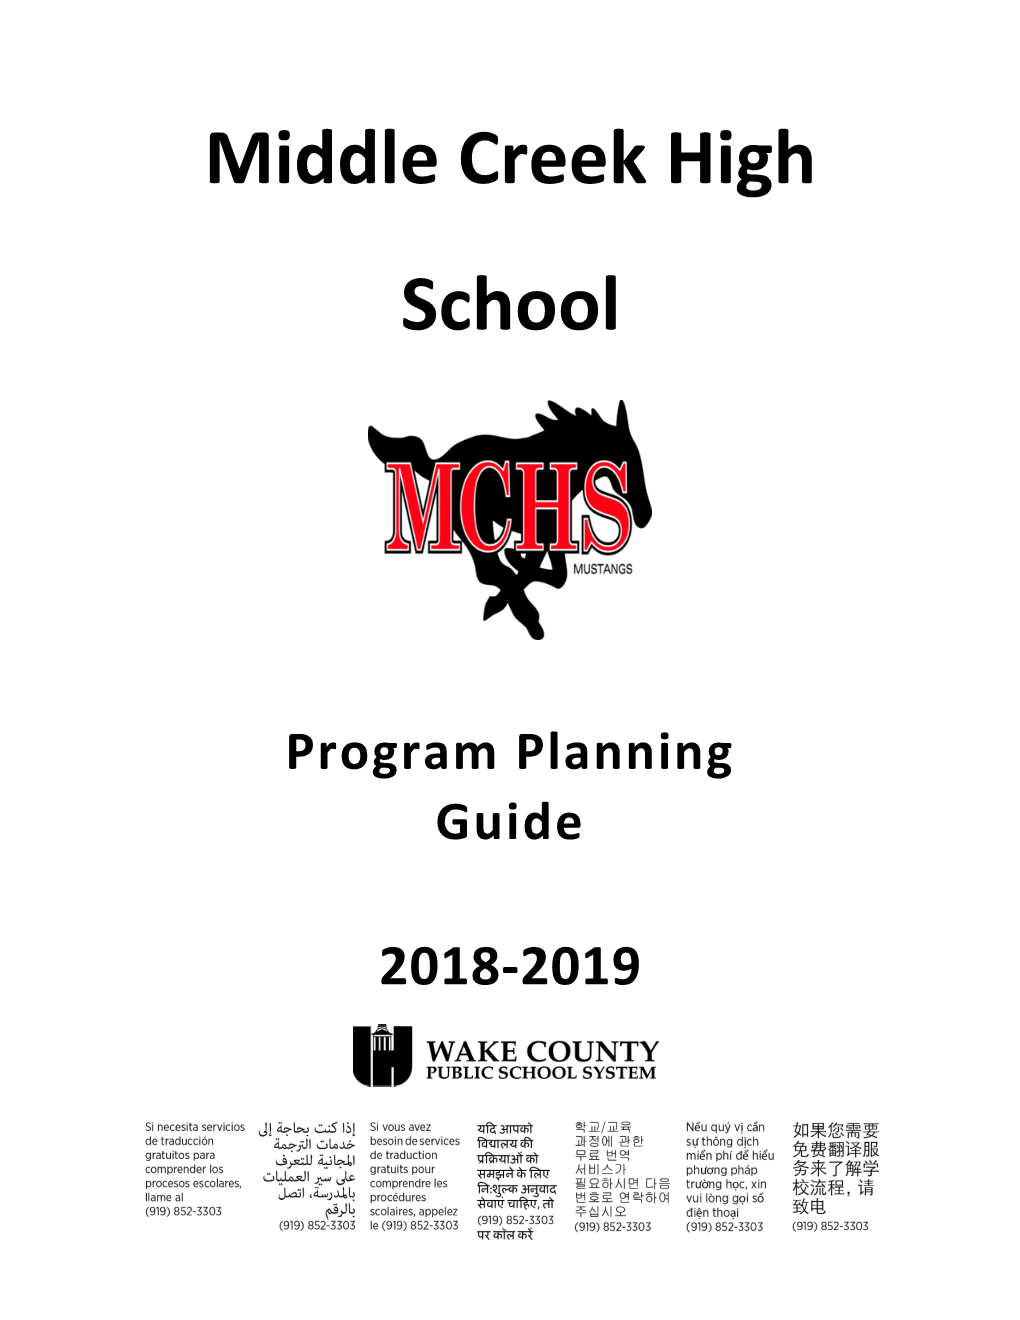 Middle Creek High School